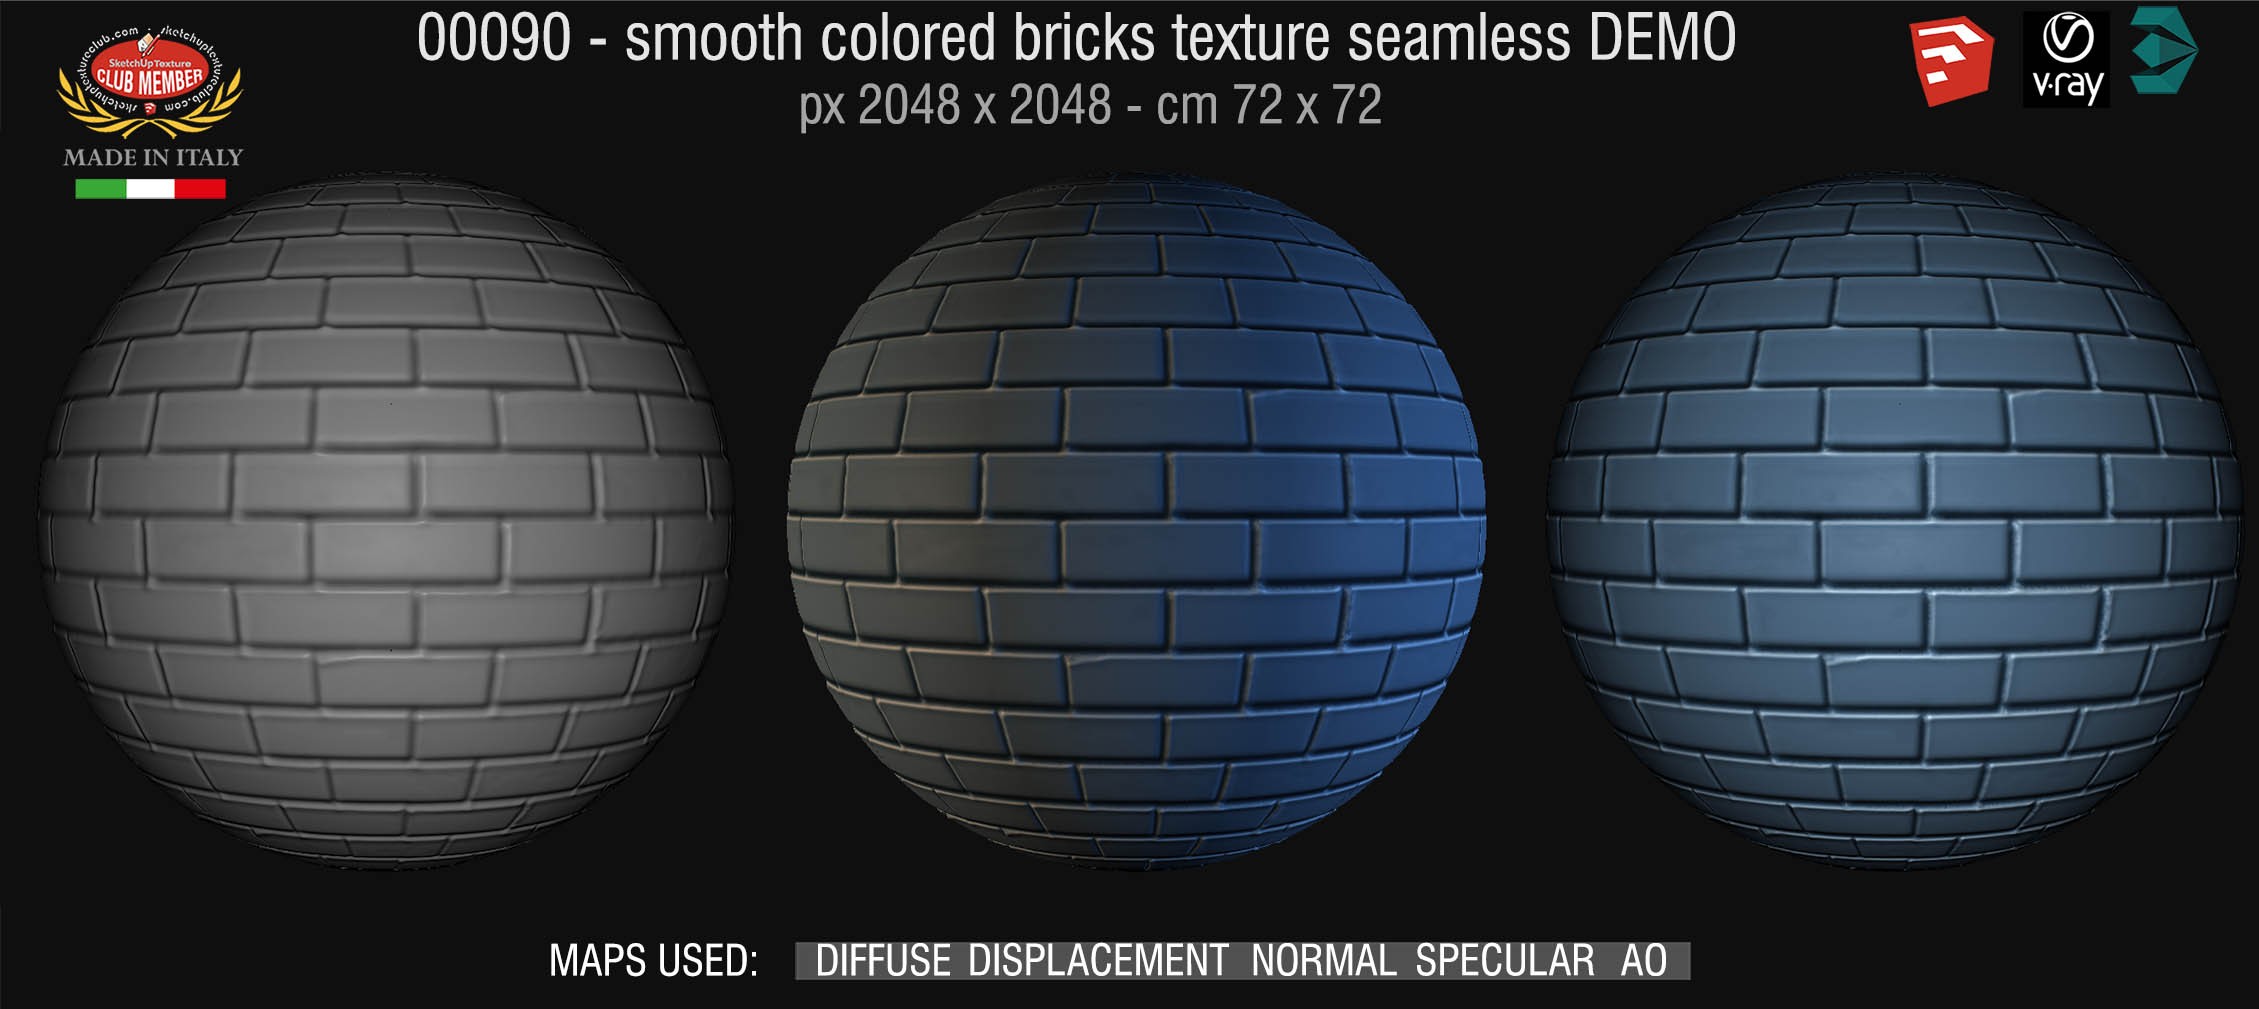 00090 smooth colored bricks texture seamless + maps DEMO